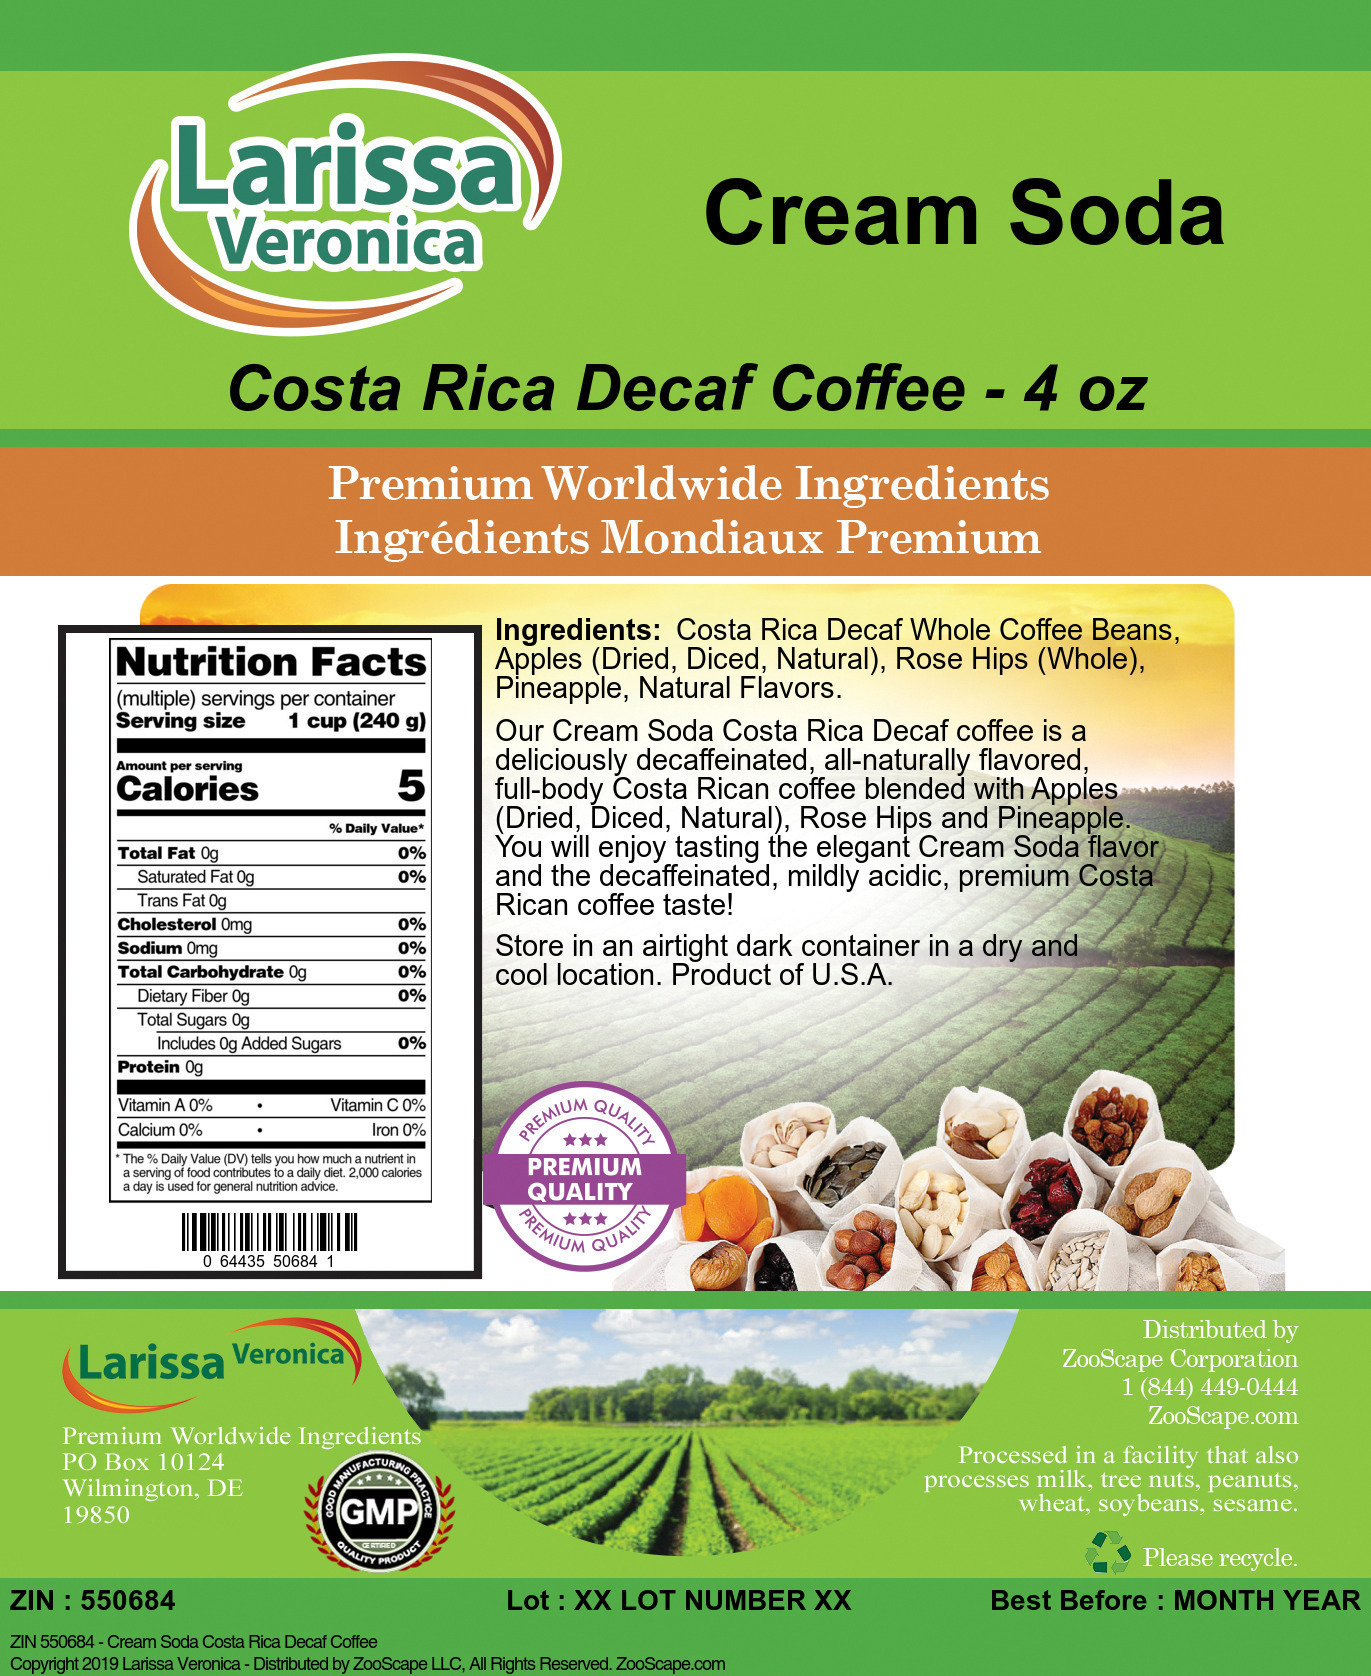 Cream Soda Costa Rica Decaf Coffee - Label